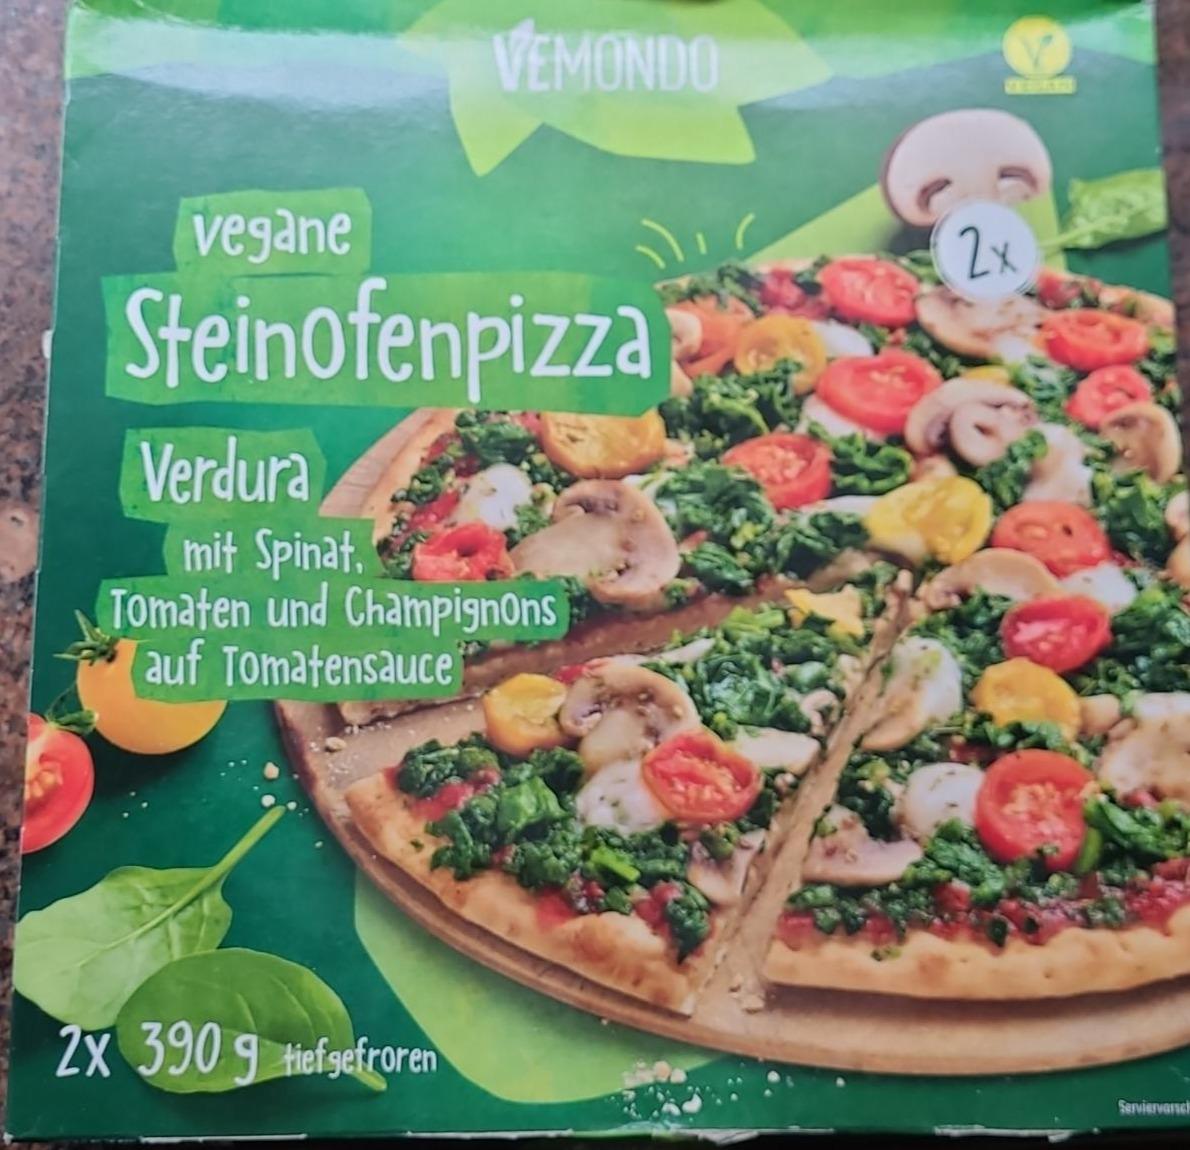 Fotografie - Vegane Steinofenpizza Verdura mit Spinat, Tomaten und Champignons auf Tomatensauce Vemondo